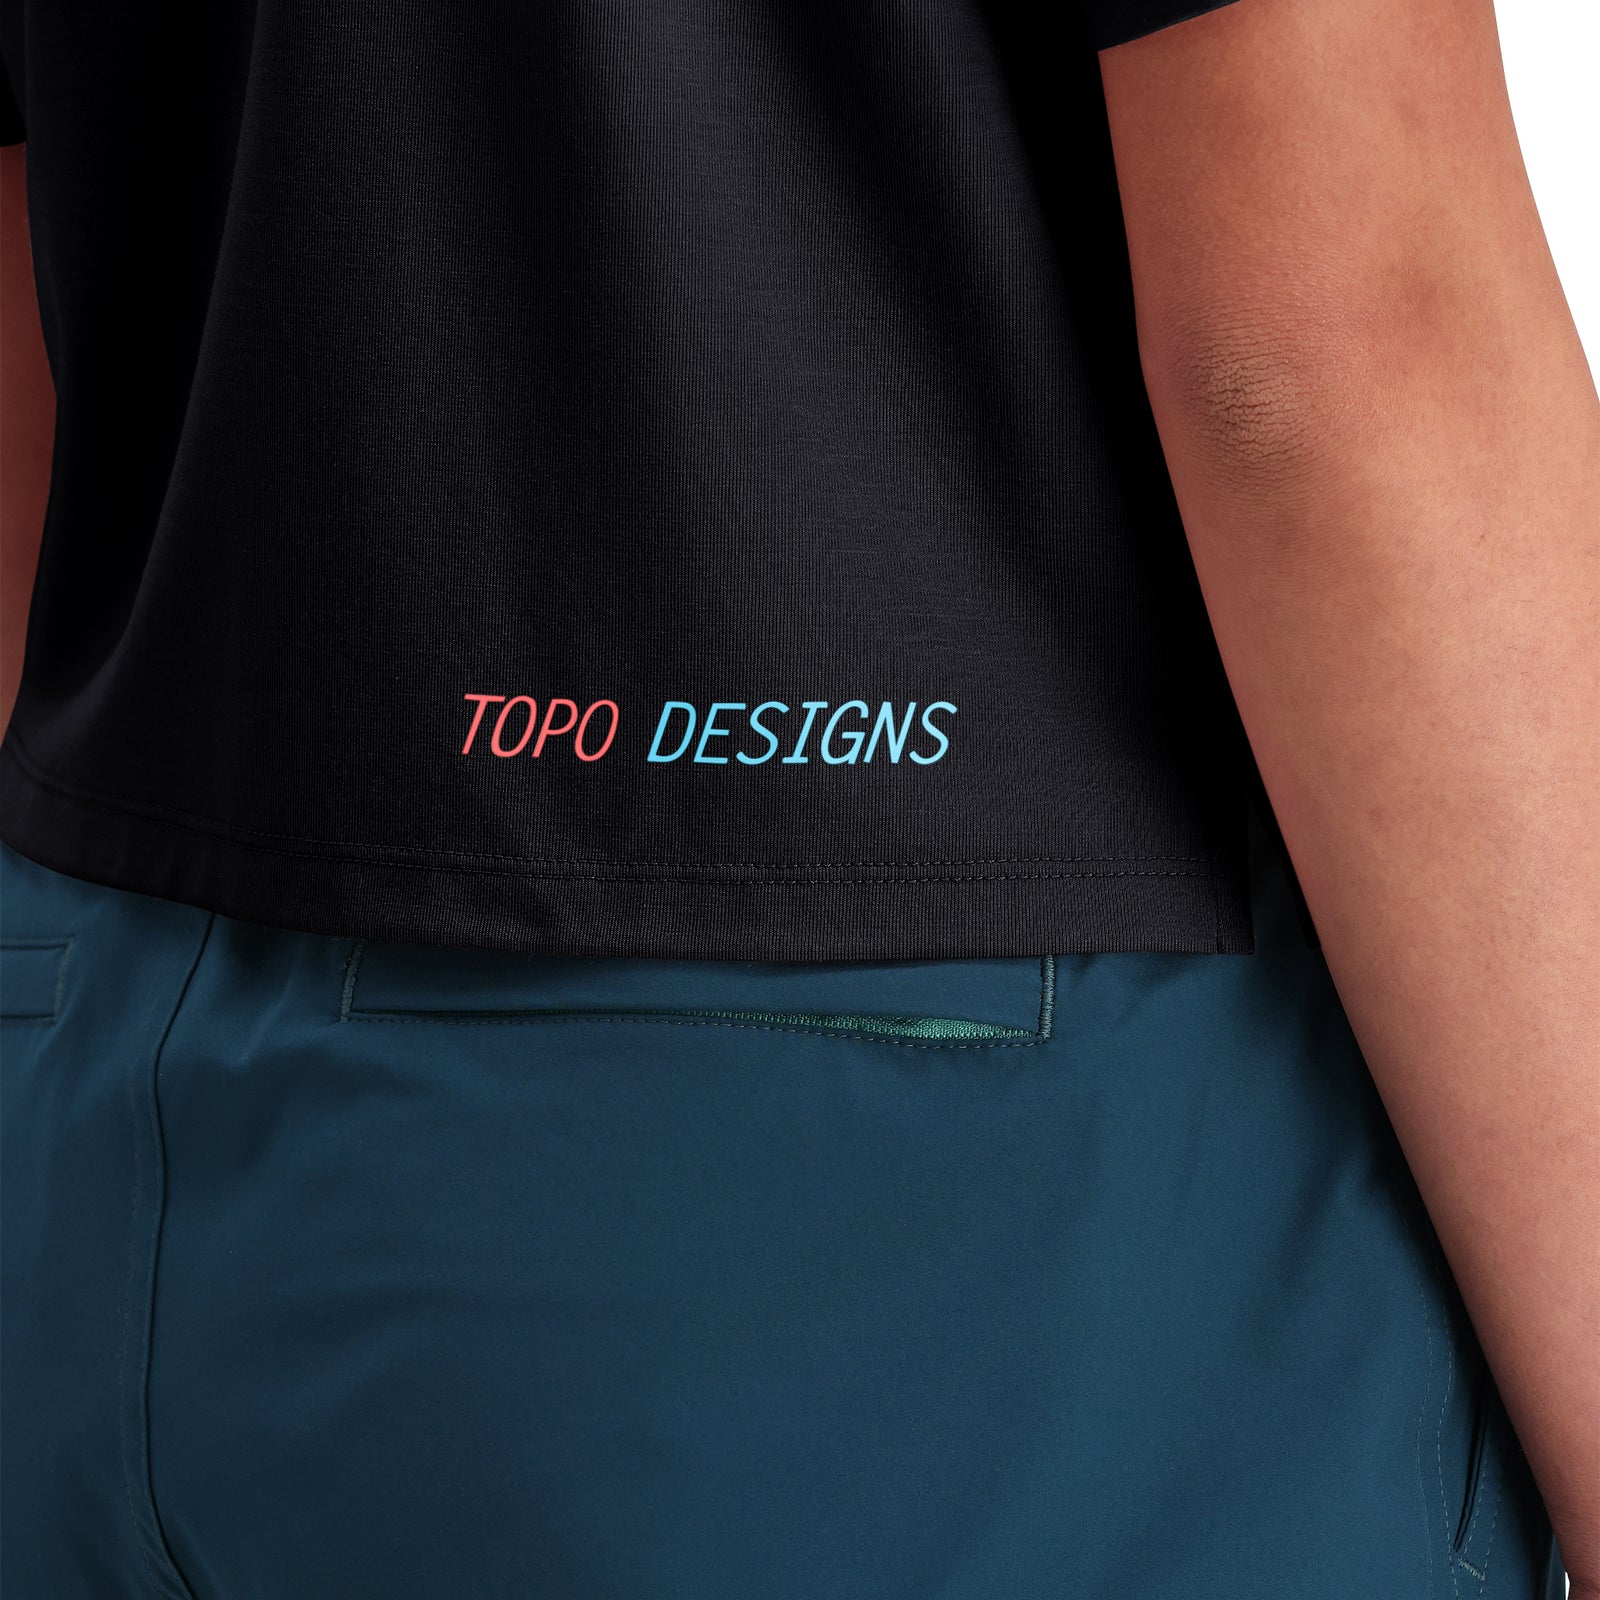 Detail shot of Topo Designs Global Tek Crew Ss - Women's in "Black"